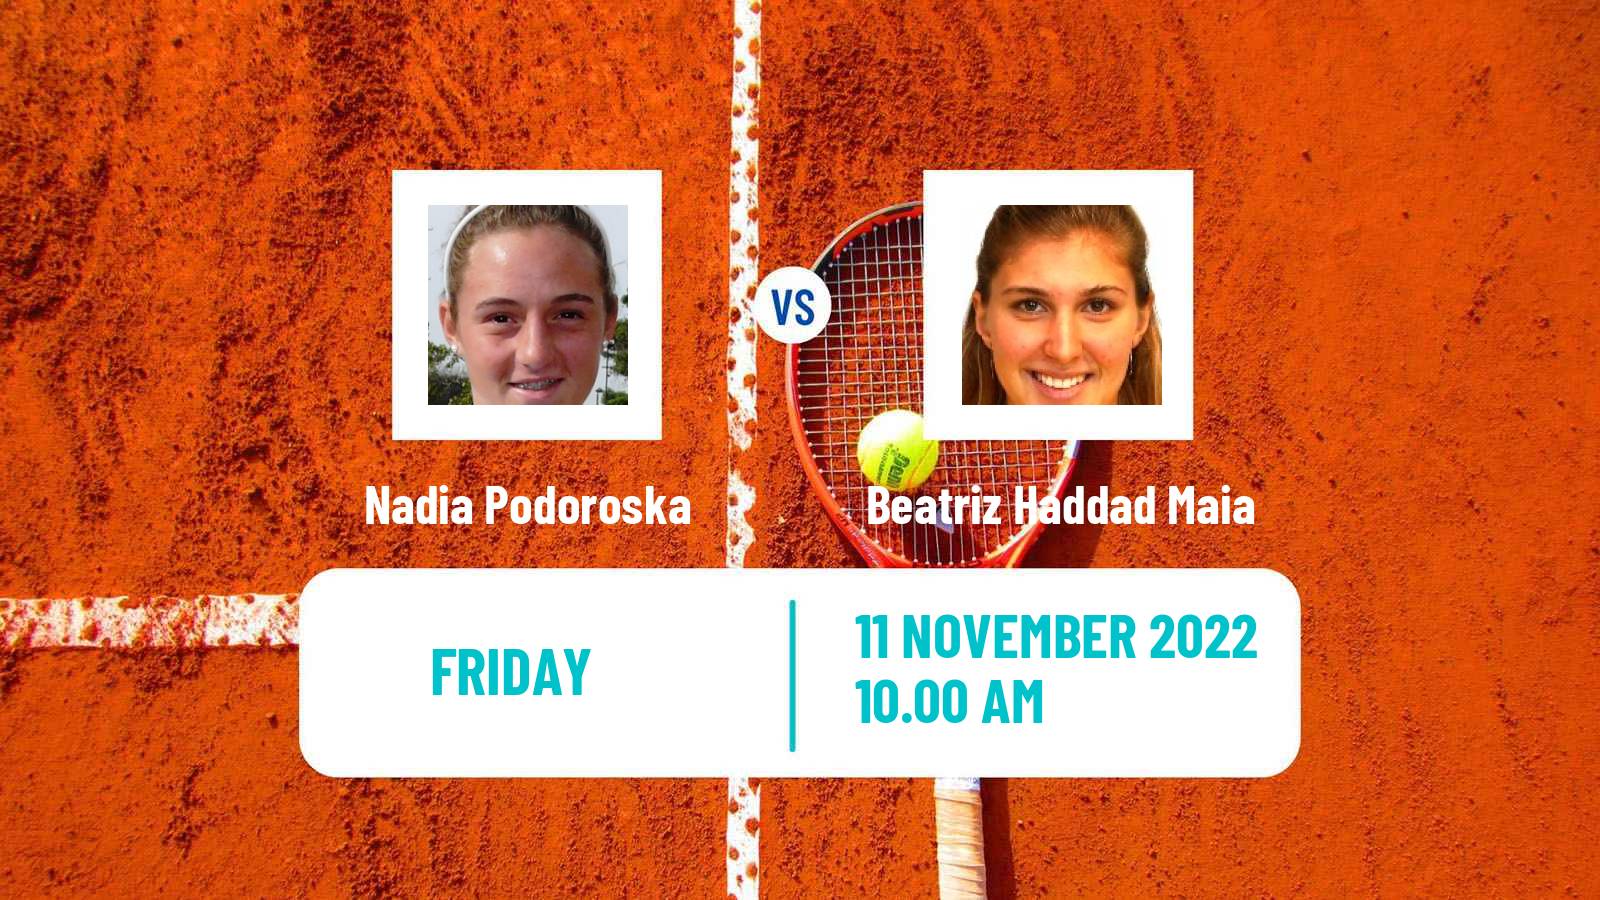 Tennis WTA Billie Jean King Cup World Group Nadia Podoroska - Beatriz Haddad Maia